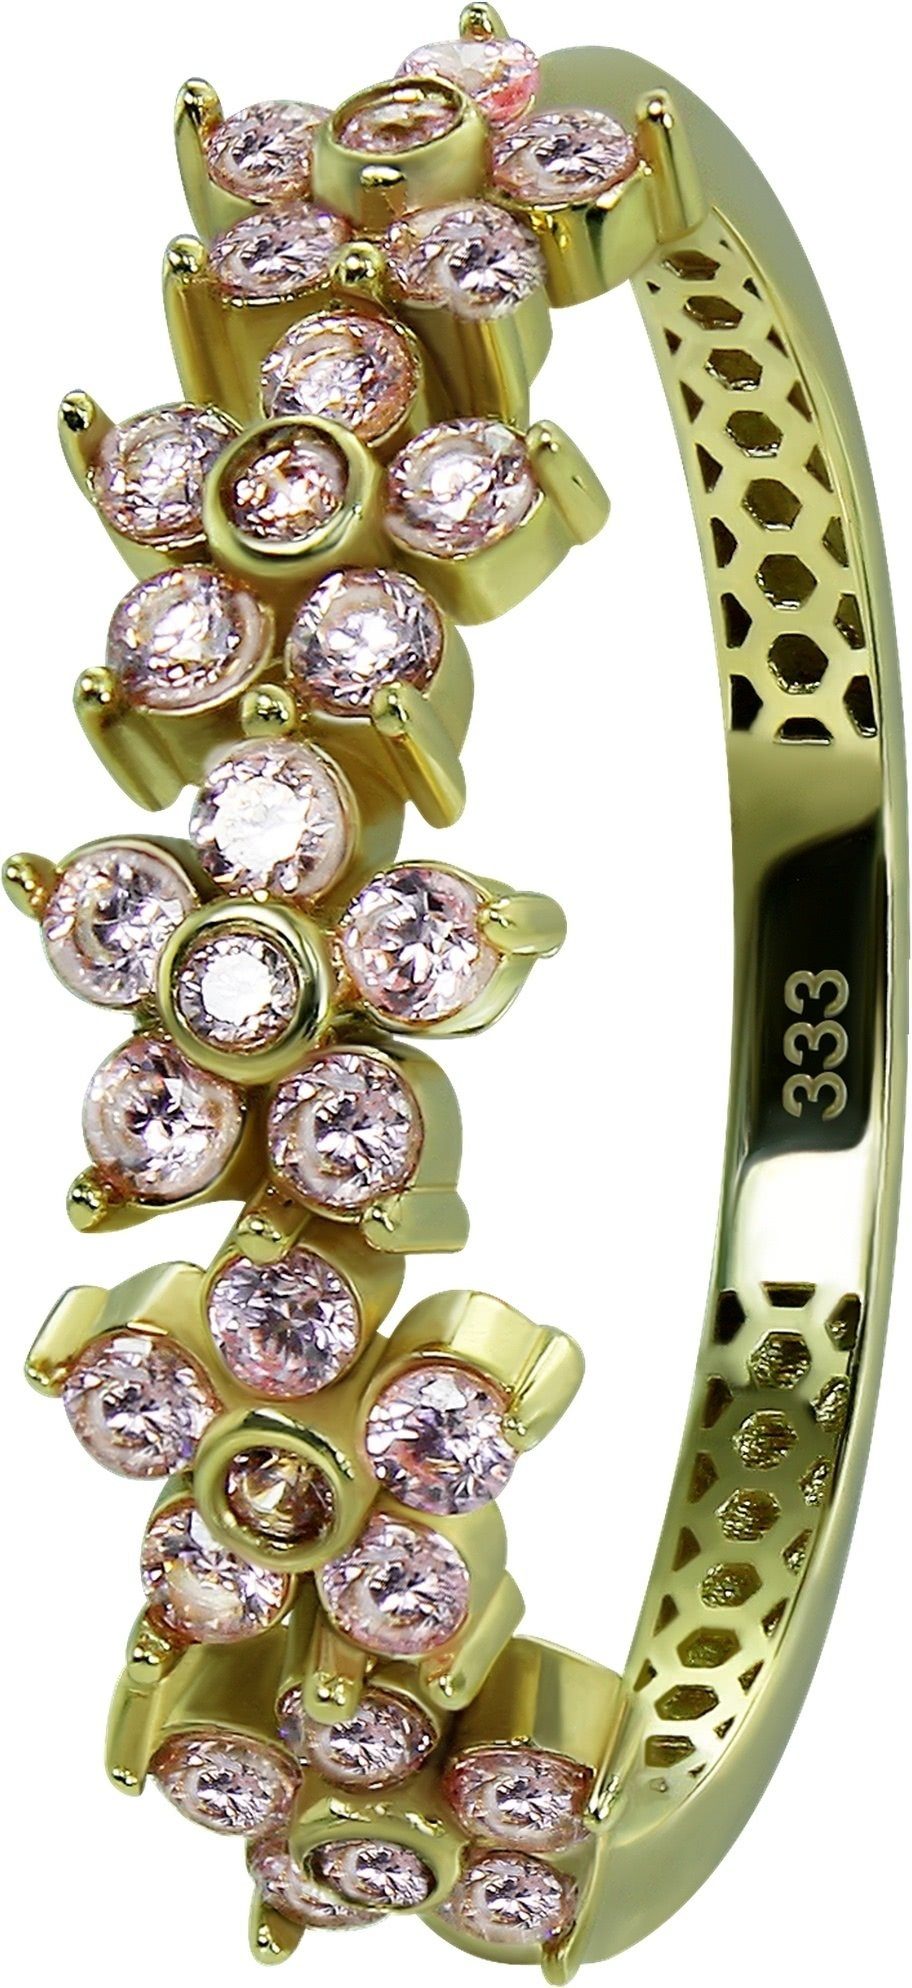 GoldDream Goldring GoldDream Gold Ring Blumen Gr.58 (Fingerring), Damen Ring Blumen, 58 (18,5), 333 Gelbgold - 8 Karat, gold, rosa